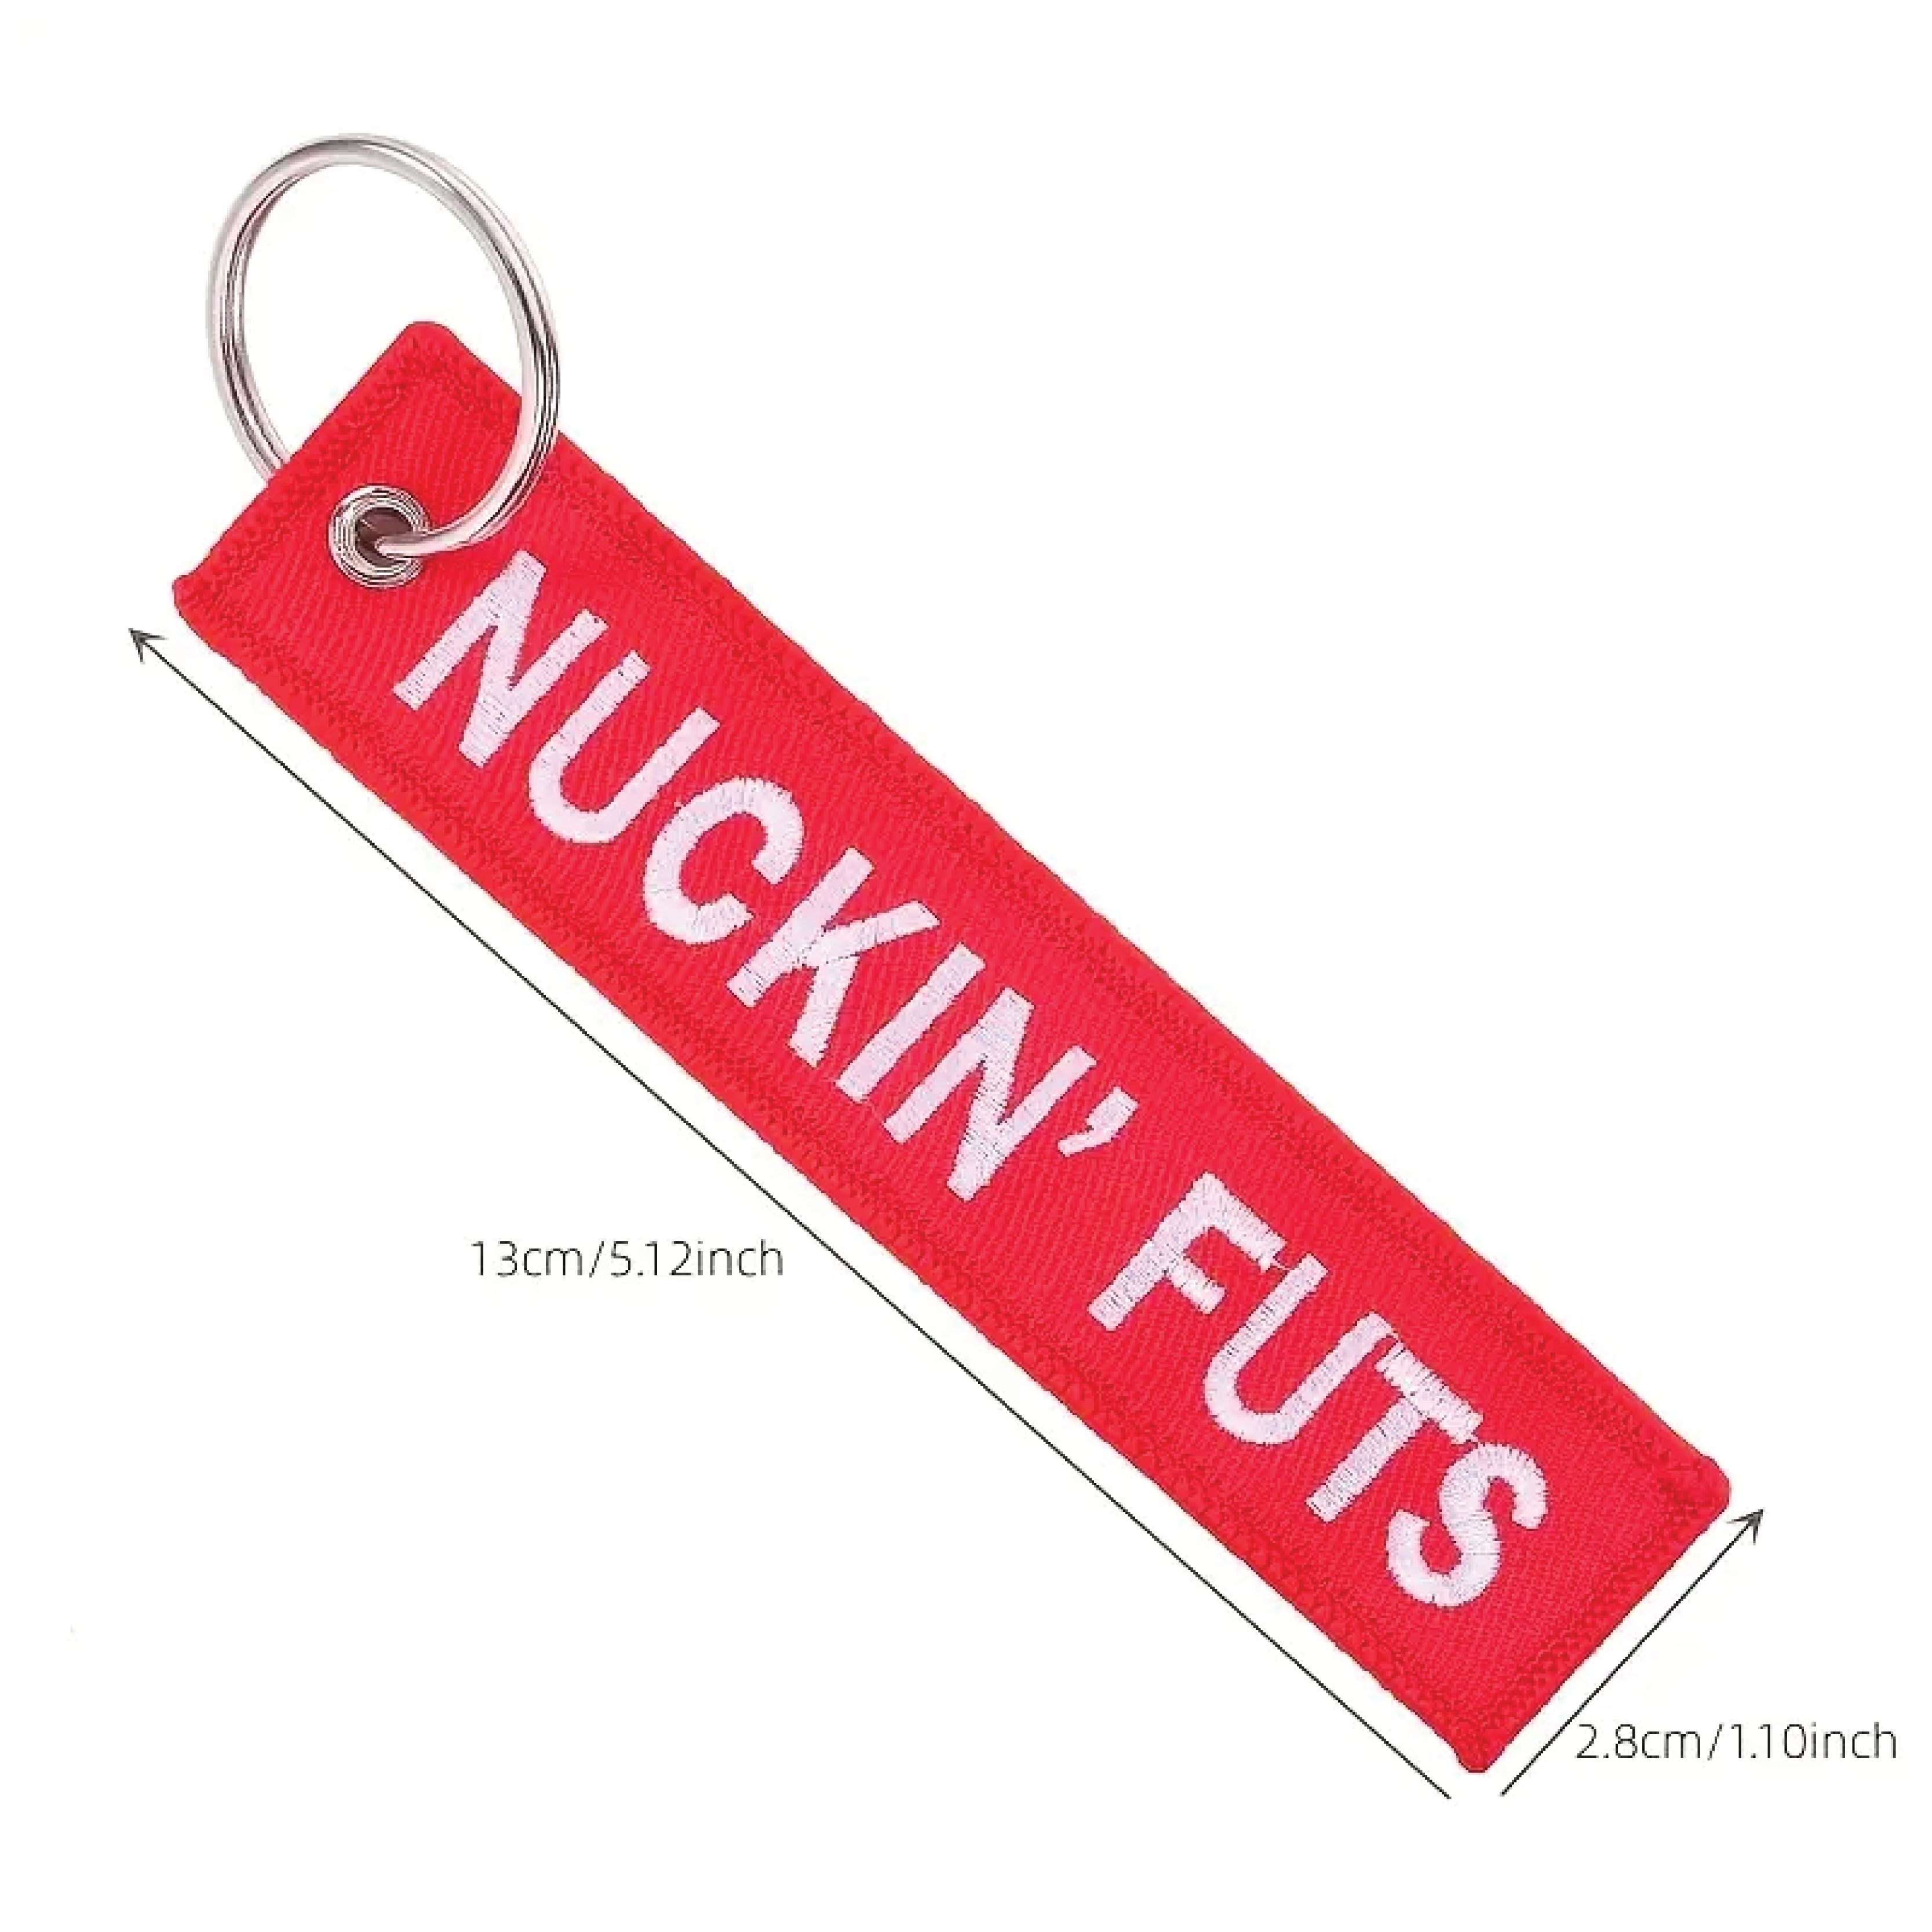 Nuckin Futs - Embroided Key Ring Key Chain